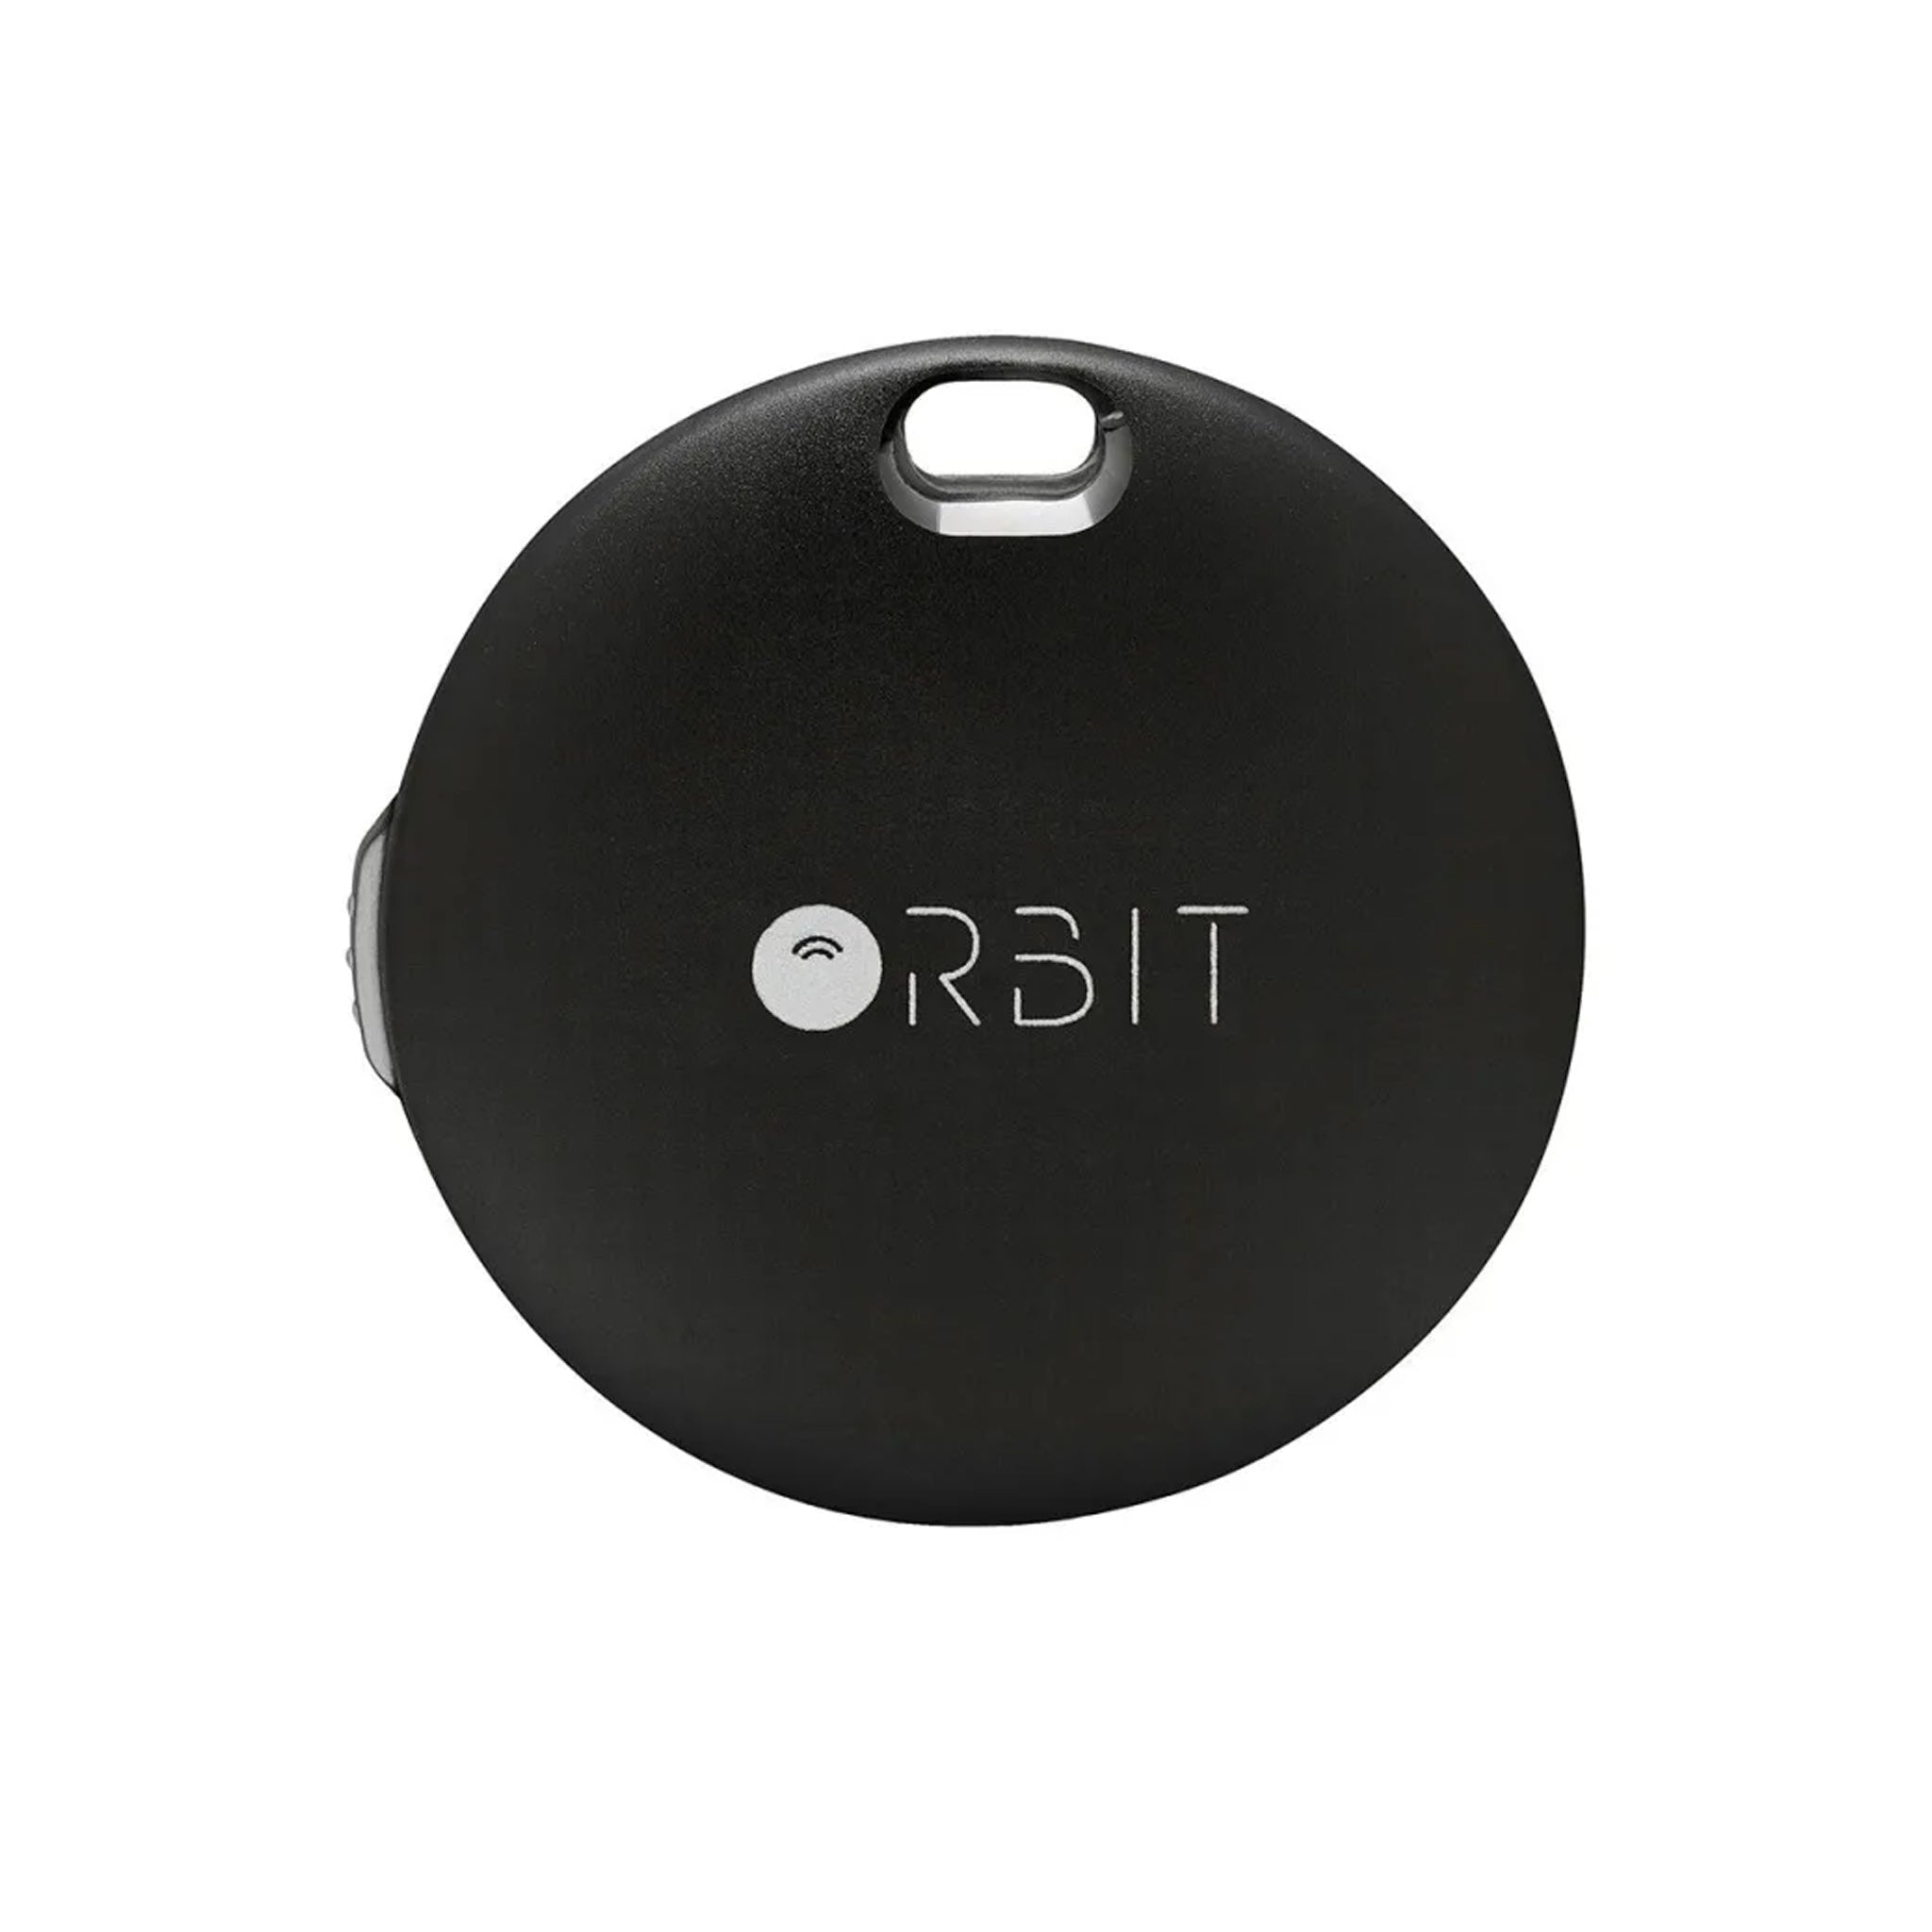 Orbit - Keys Bluetooth Tracking Device - Black